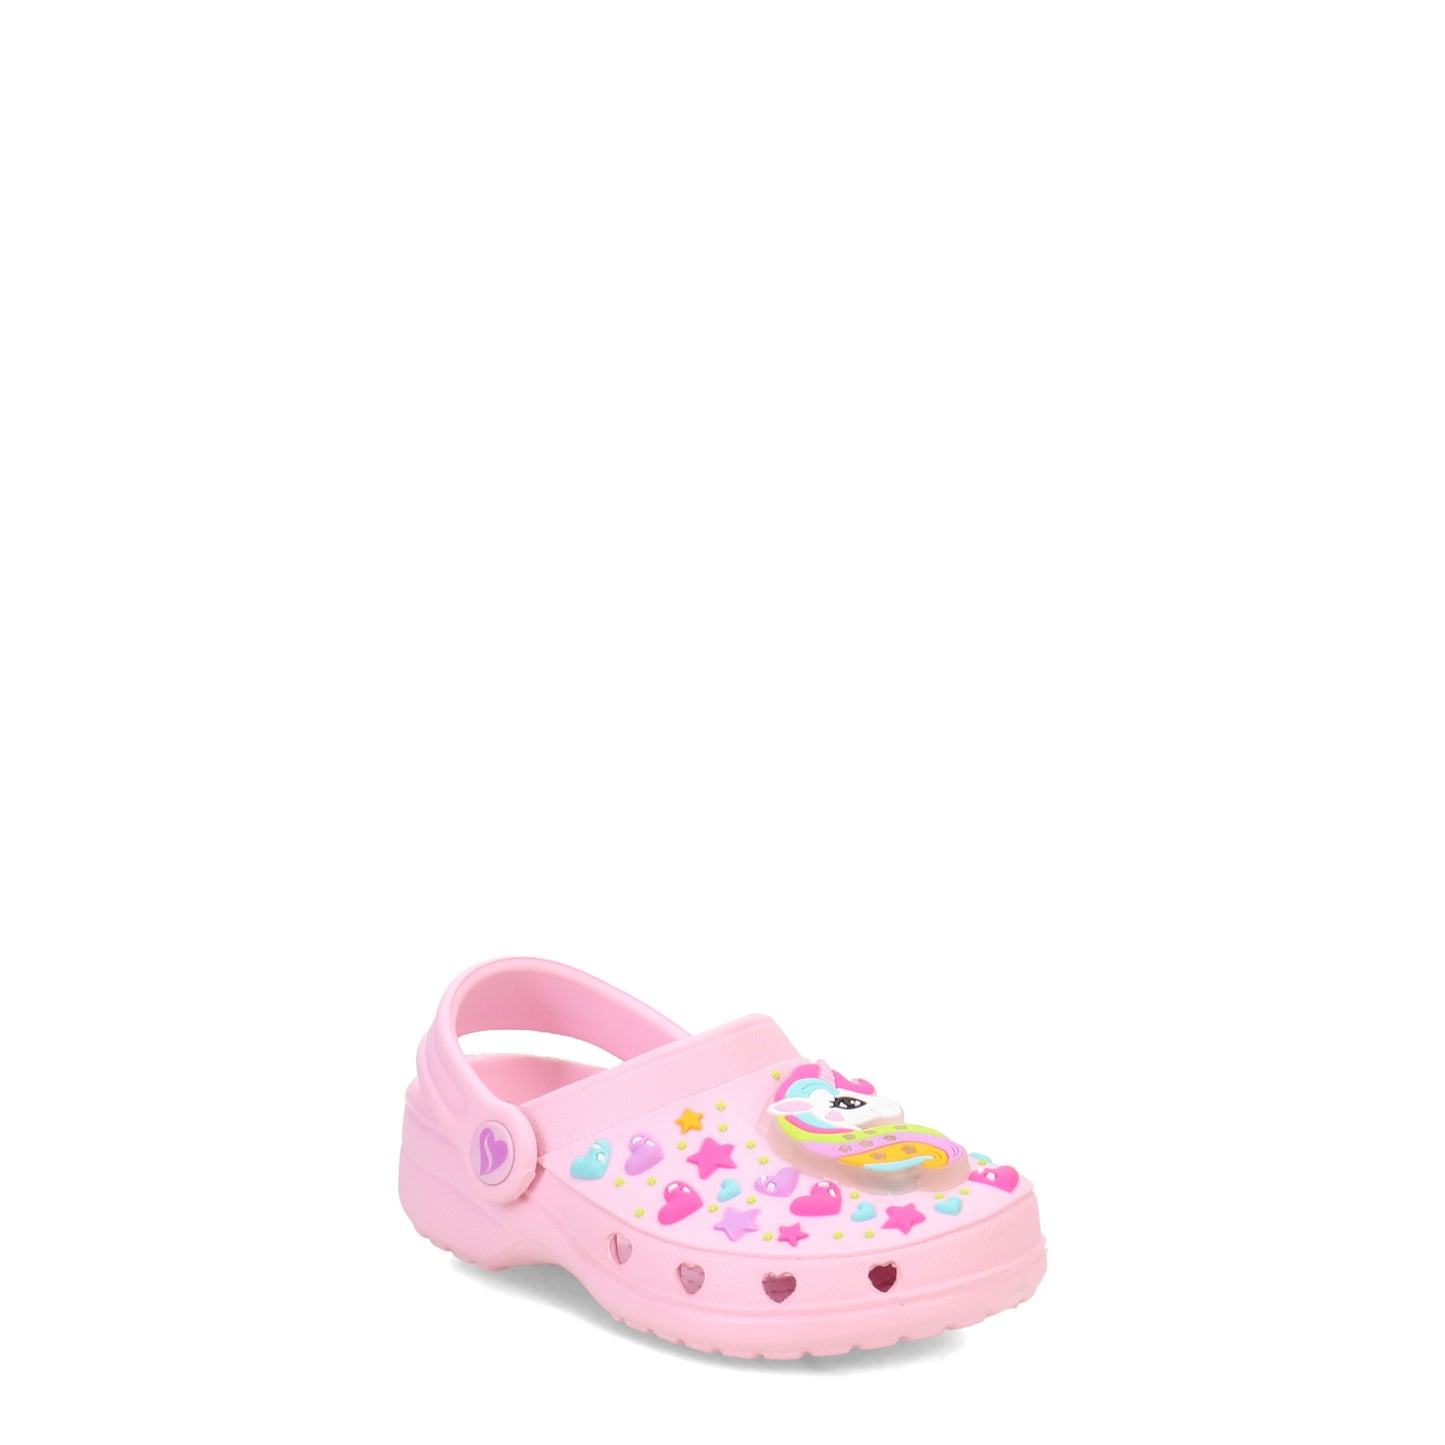 Peltz Shoes  Girl's Skechers Foamies: Heart Charmer - Unicorn Delight Clog - Toddler Pink 308016N-PNK